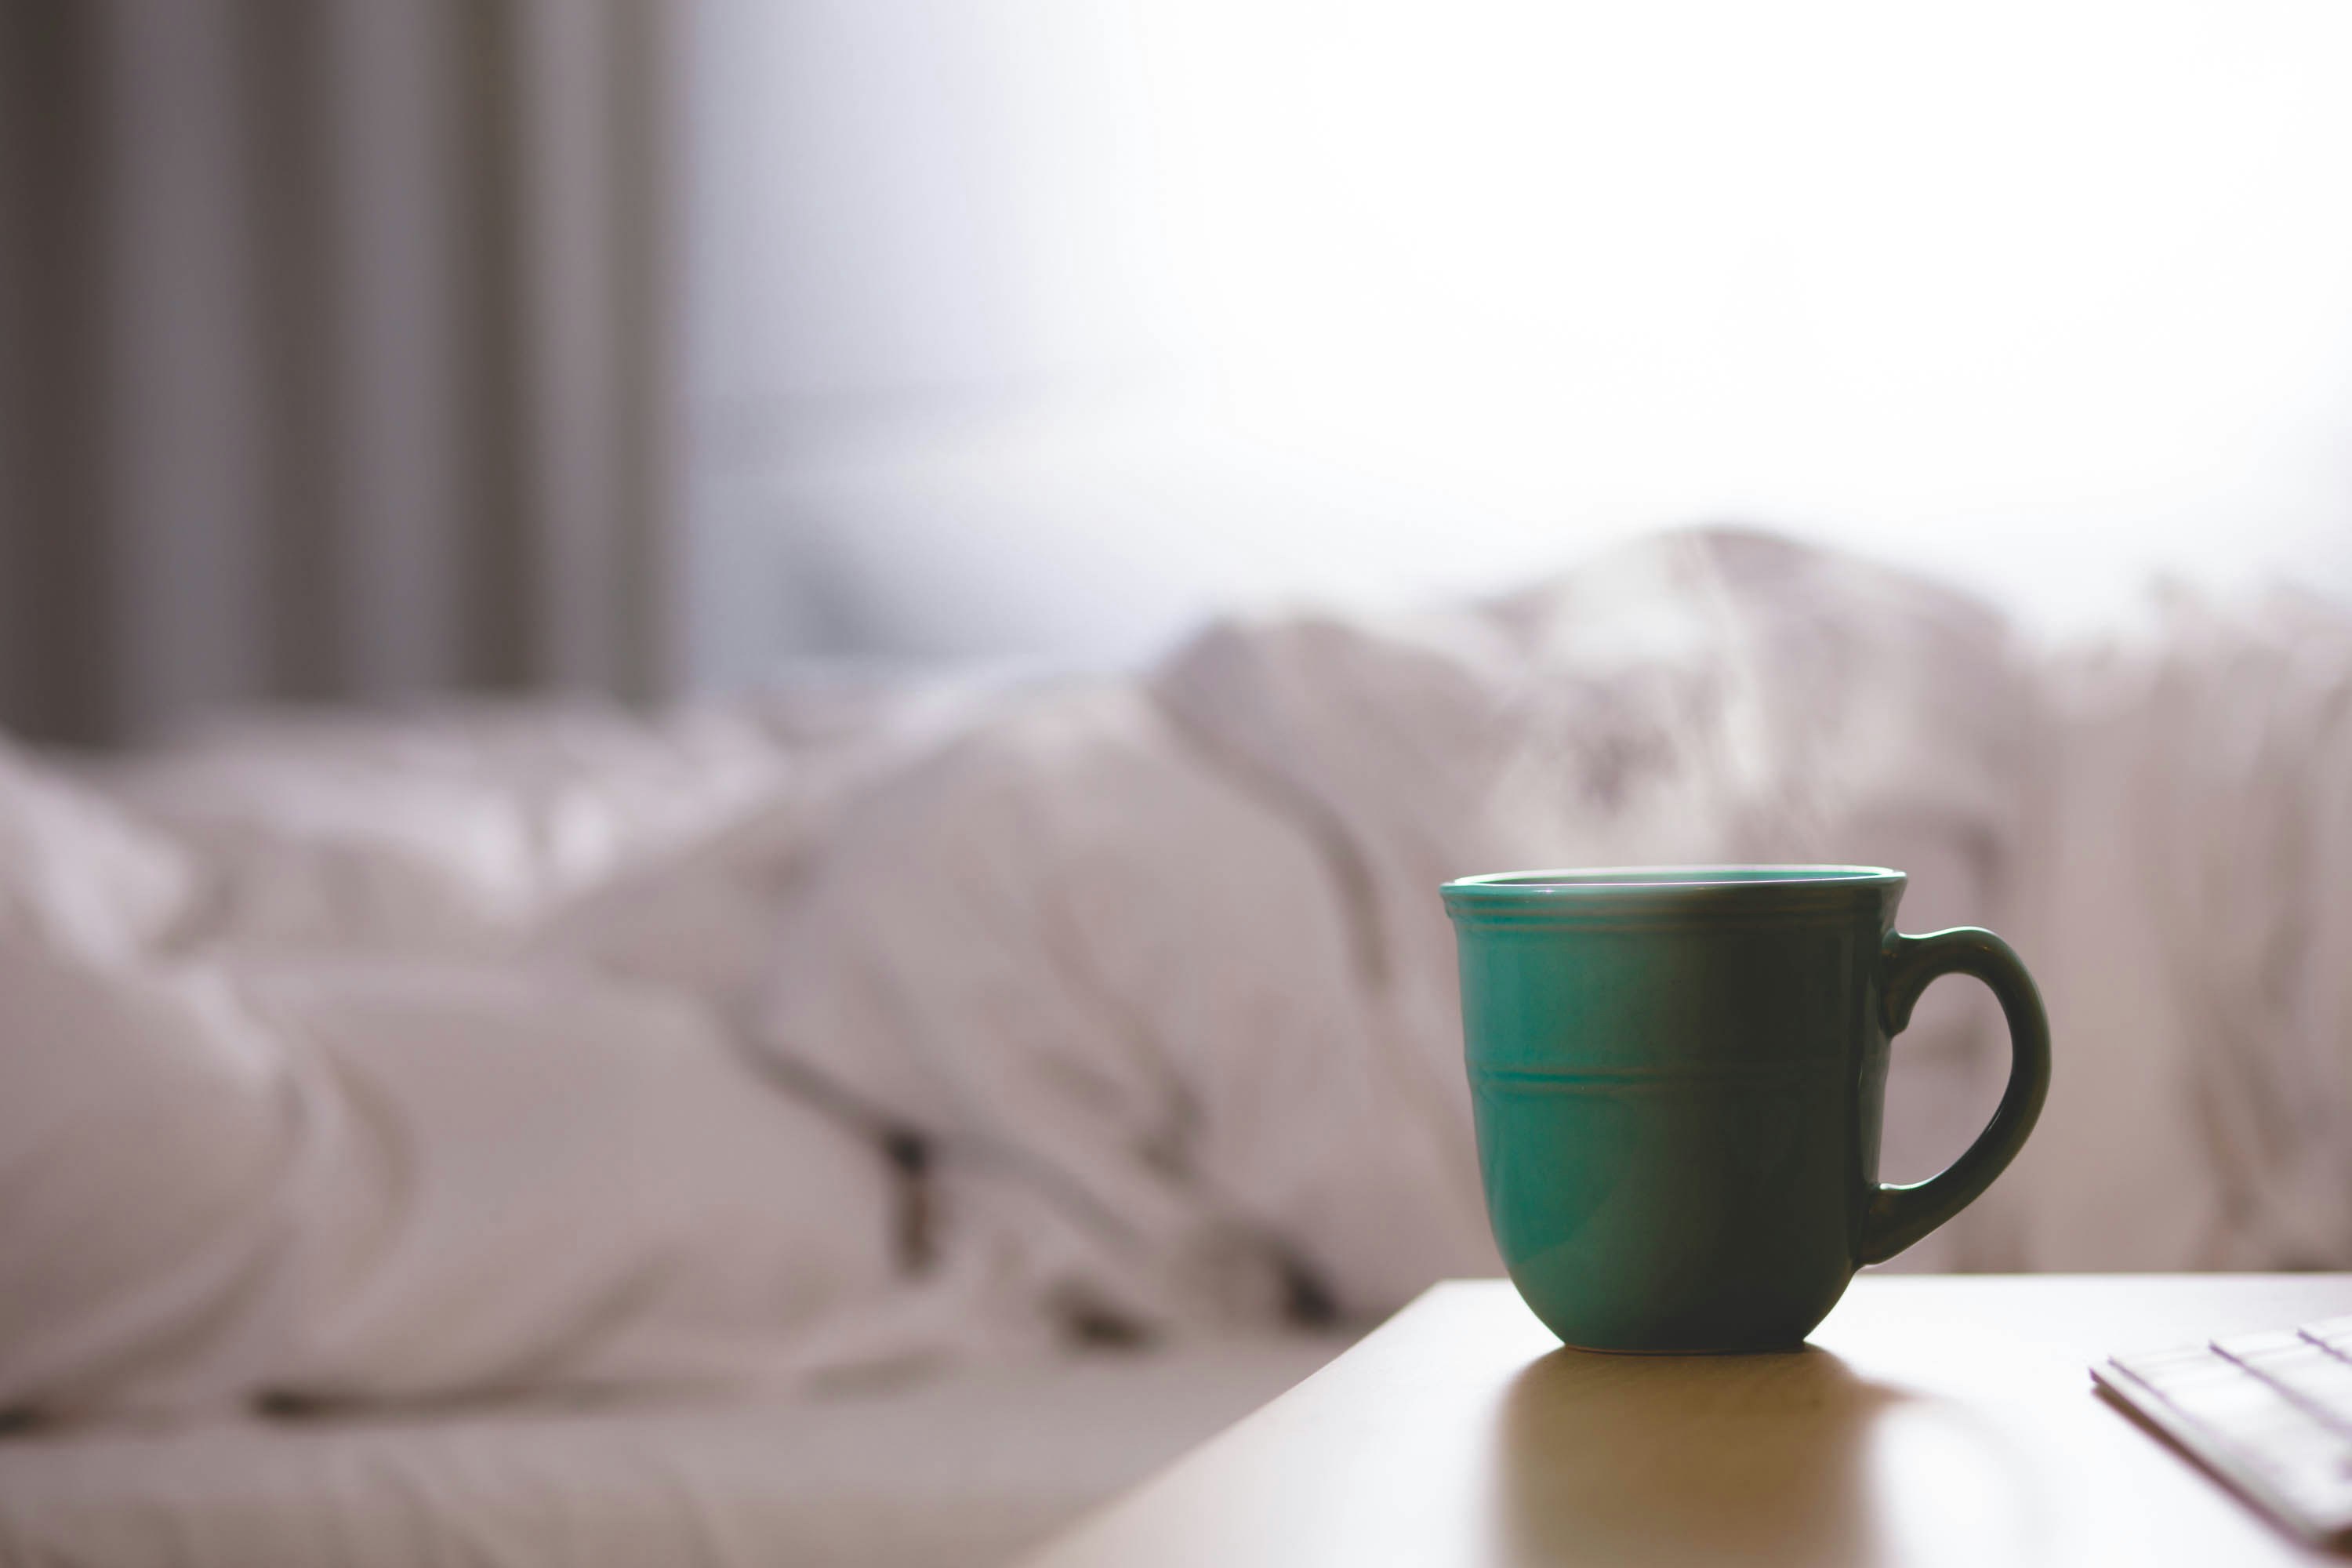 Zakaj kave ni najbolje piti, takoj ko se zbudimo?